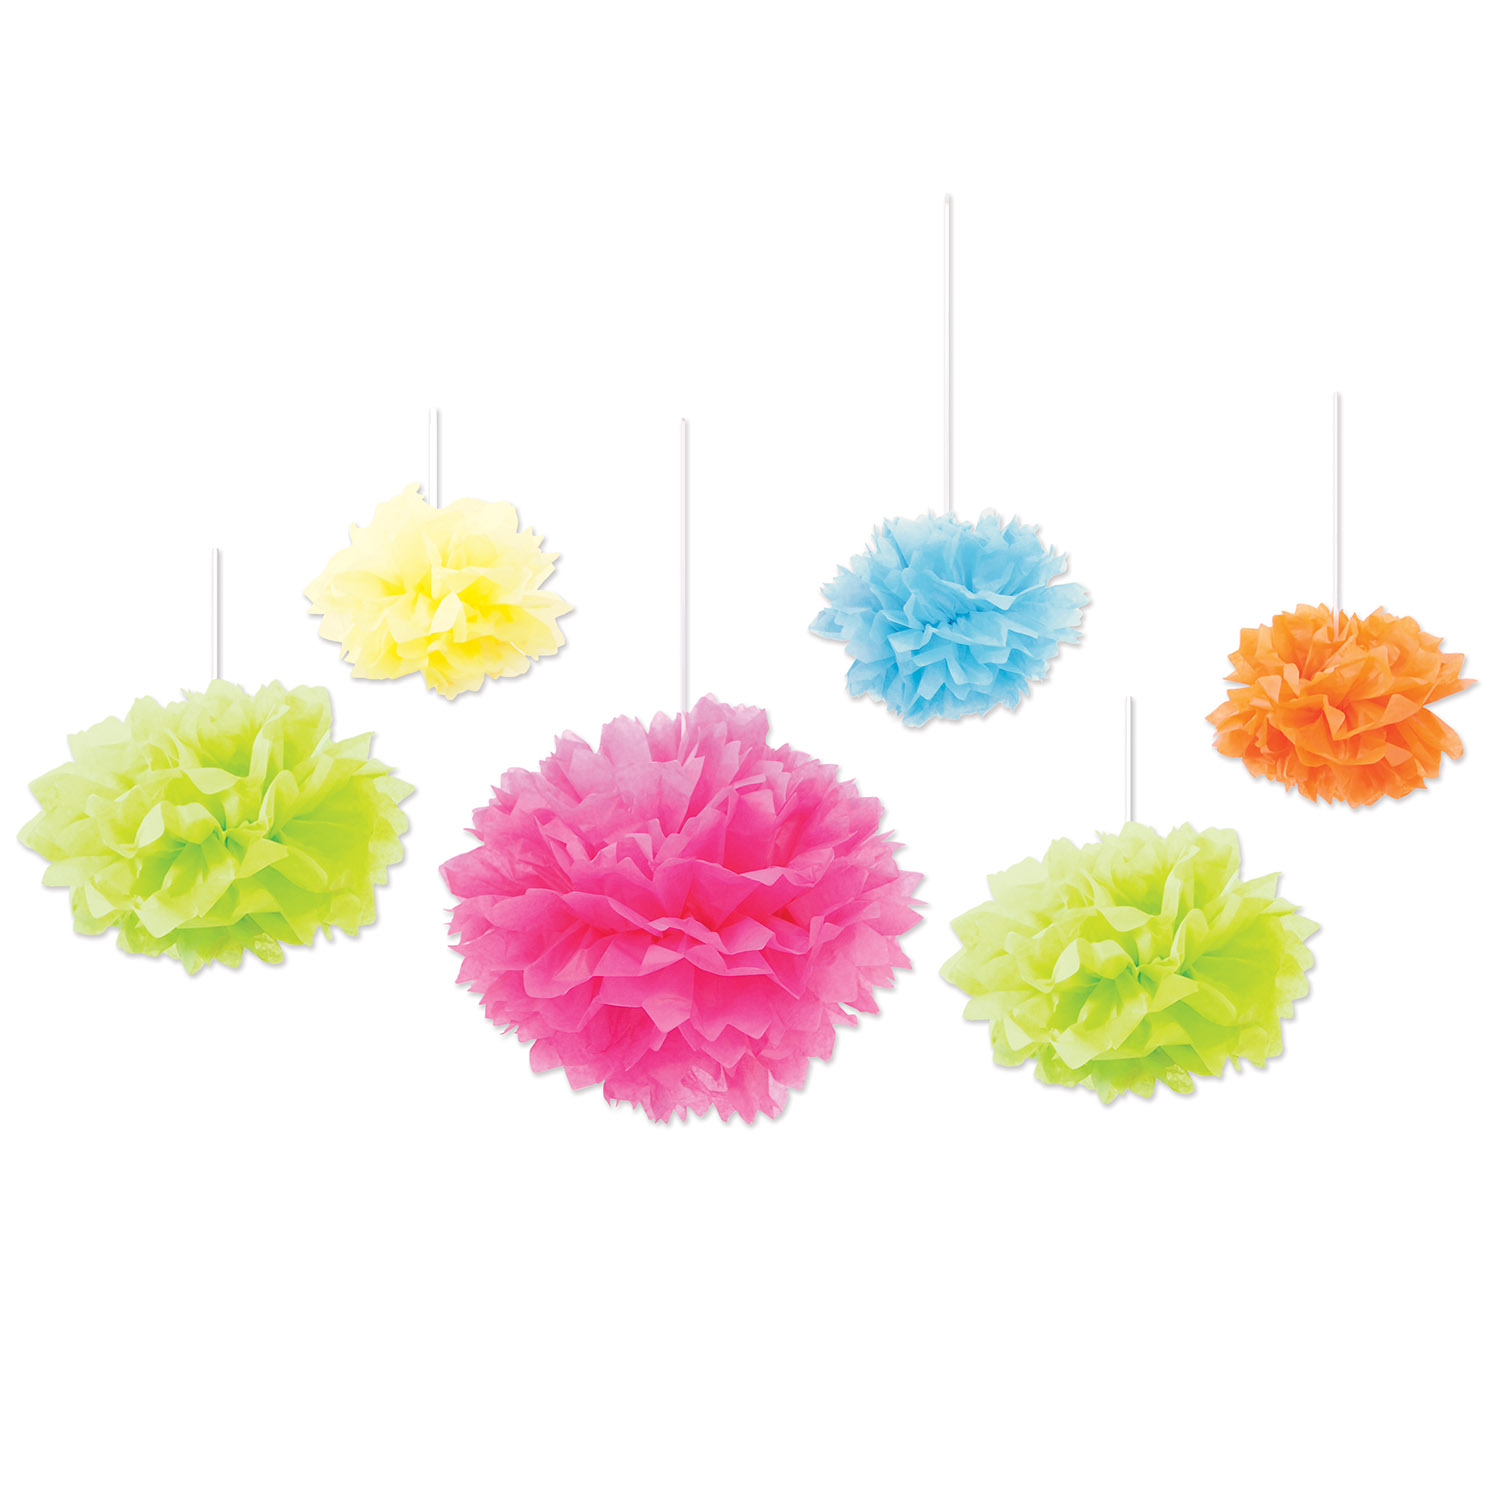 Multi-colored hanging tissue paper fluff balls 